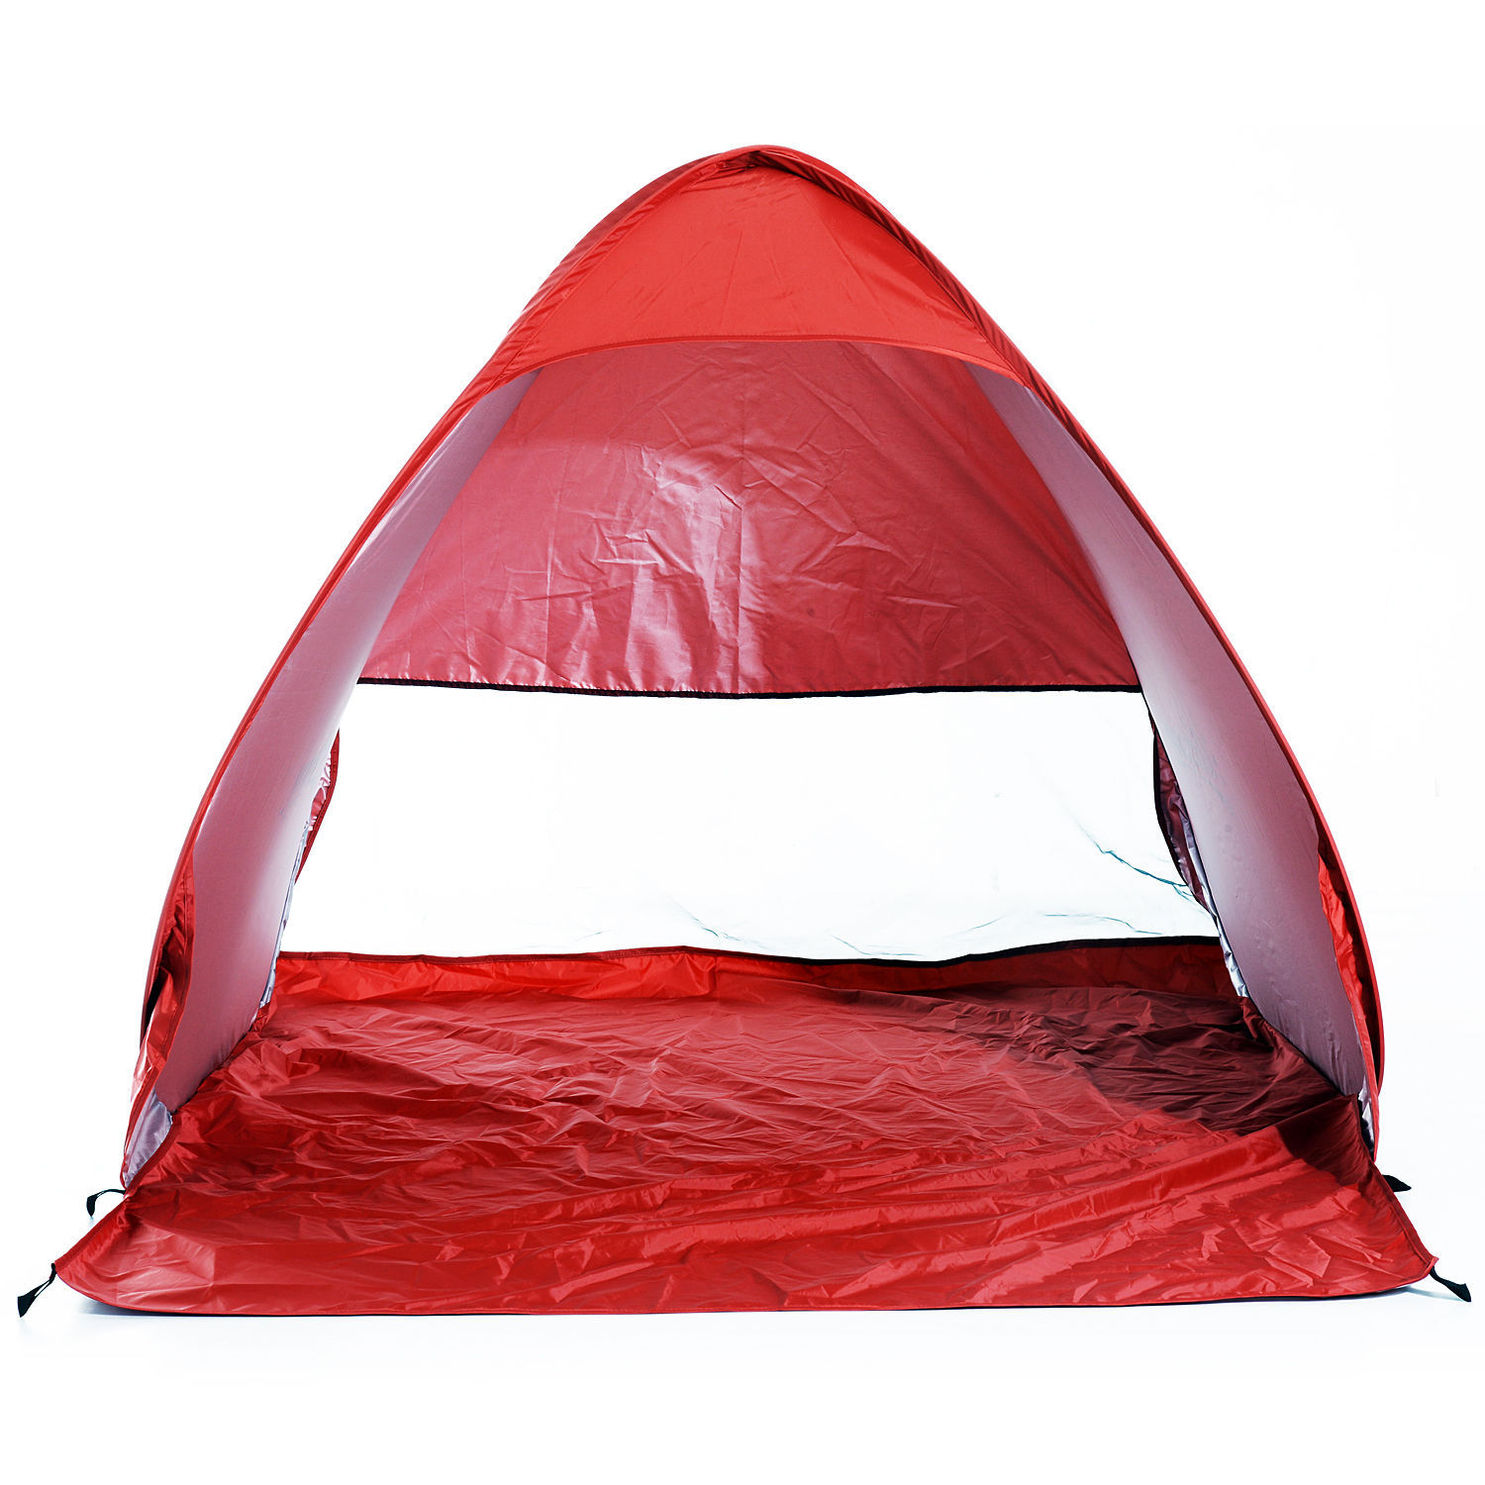 Pop-Up Zelt für 2 Personen Farbe: rot bestellen | Weltbild.de